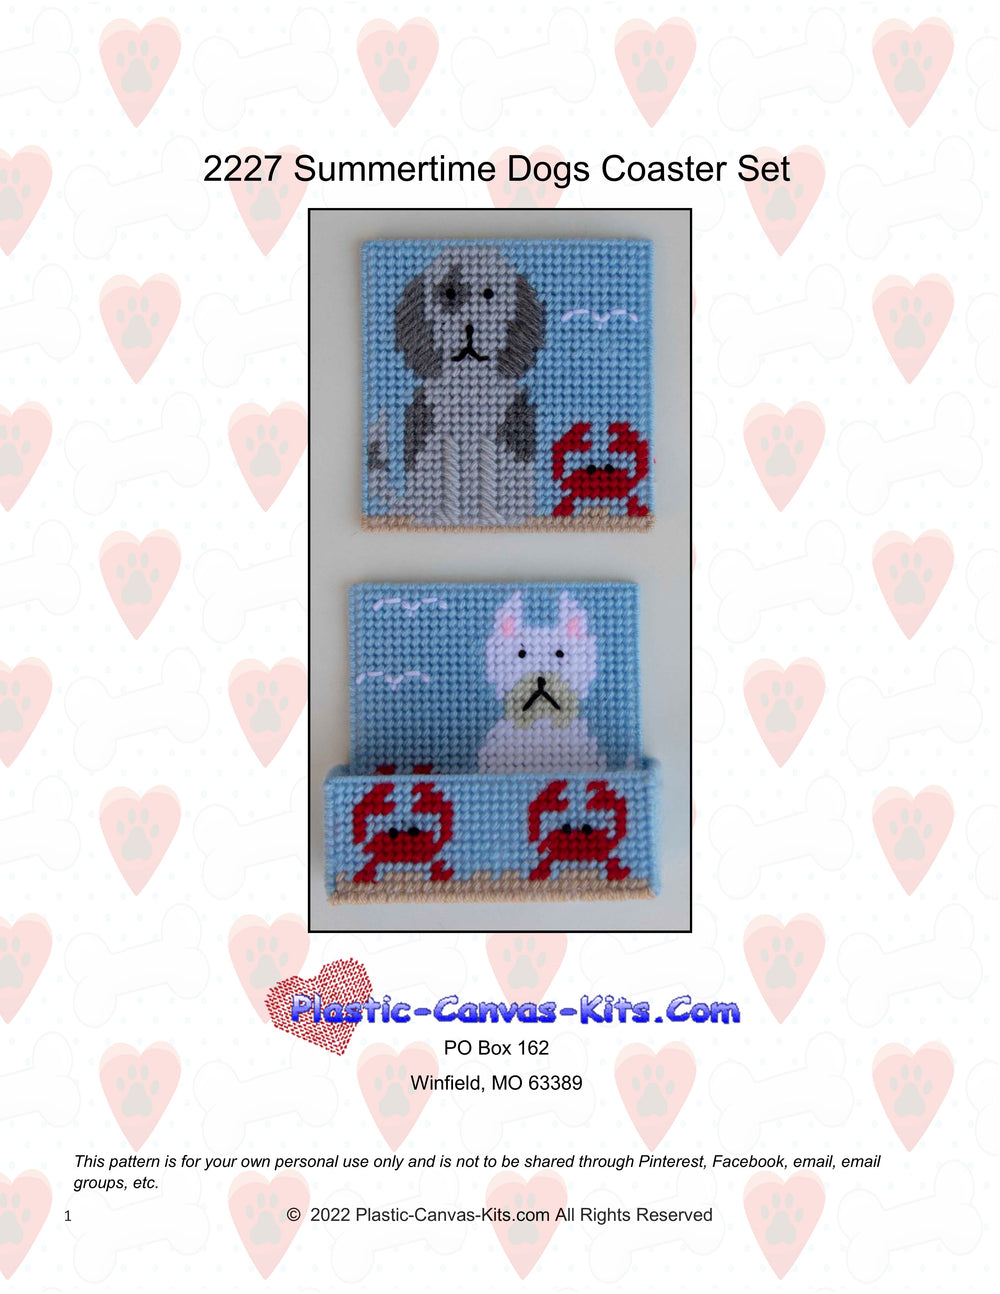 Summertime Dogs Coaster Set